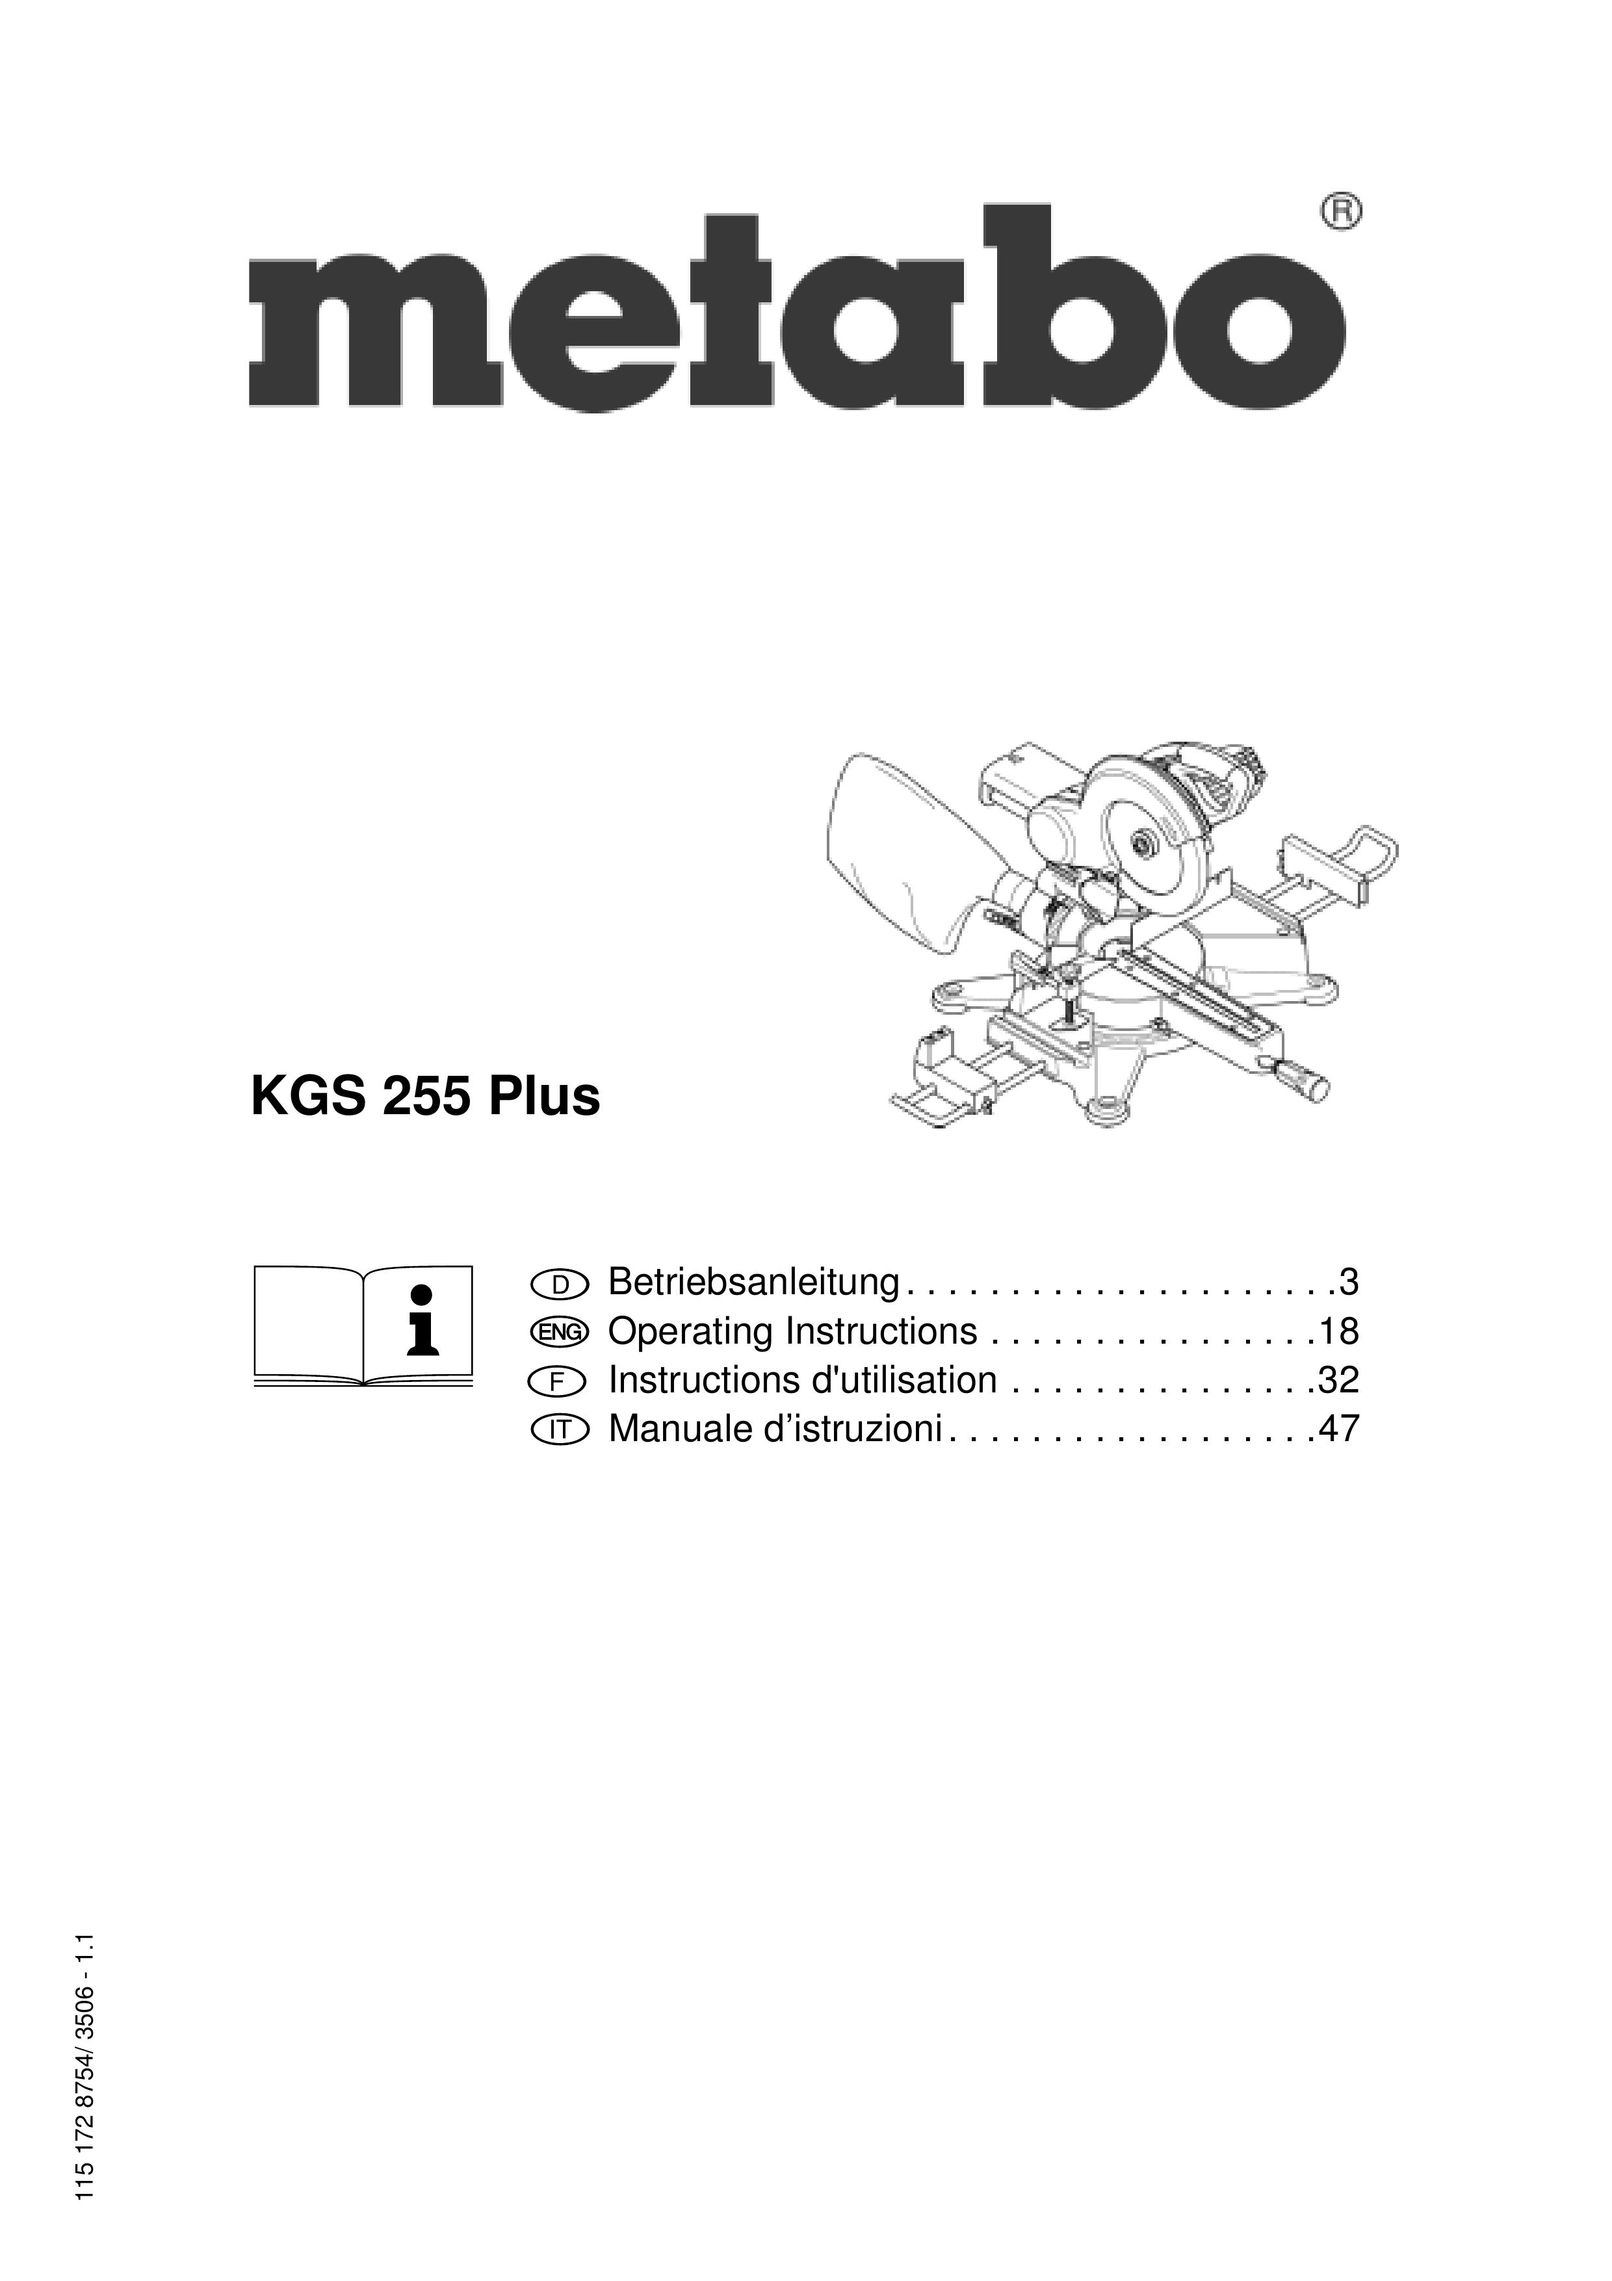 Metabo KGS 255 Plus Saw User Manual